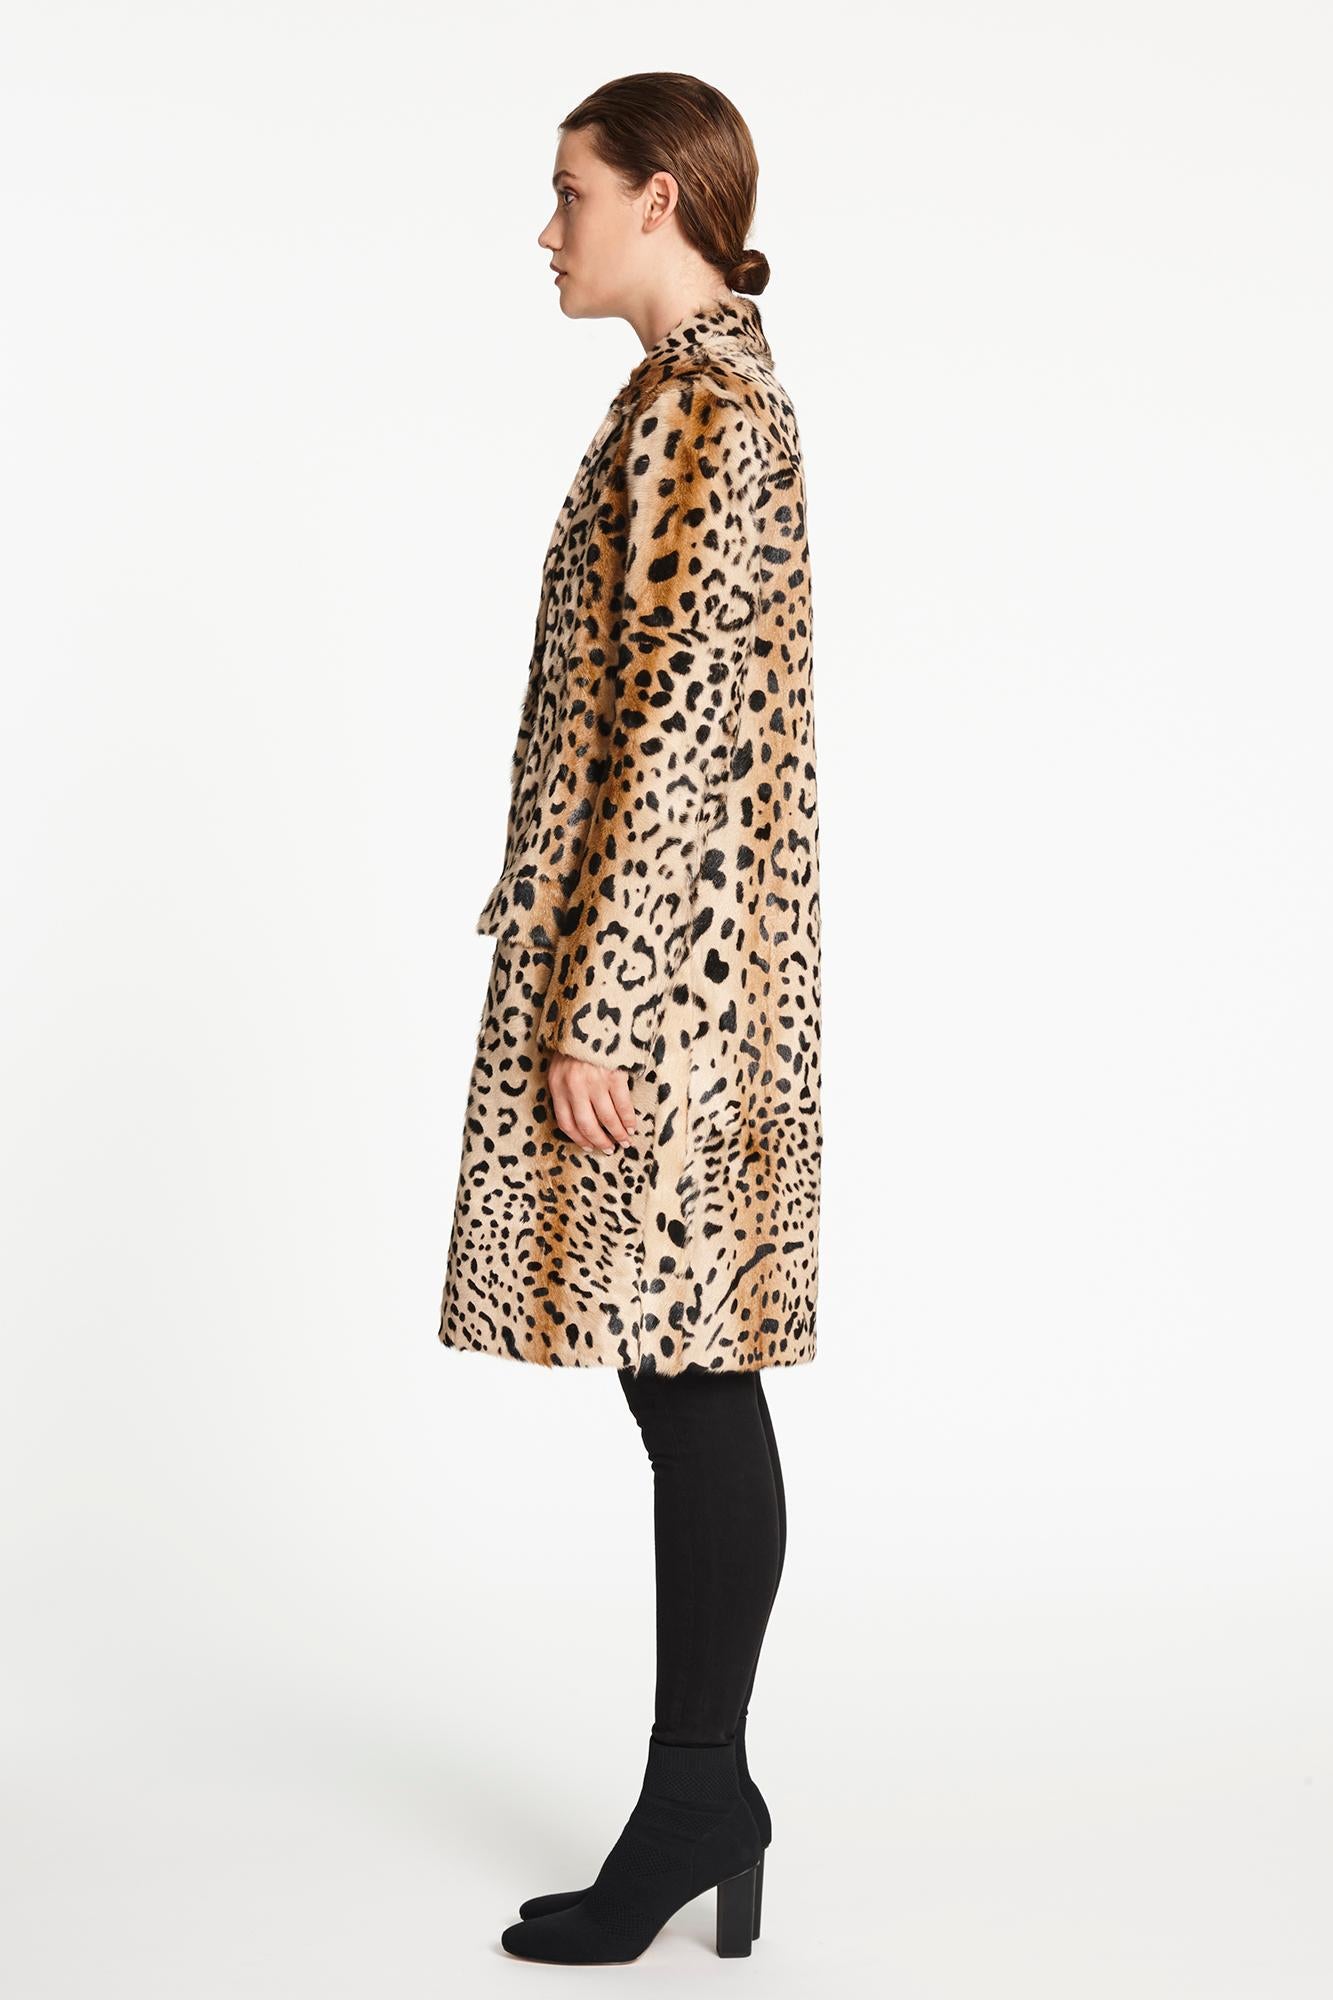 Verheyen London Leopard Print Coat in Natural Goat Hair Fur Size uk 8 2